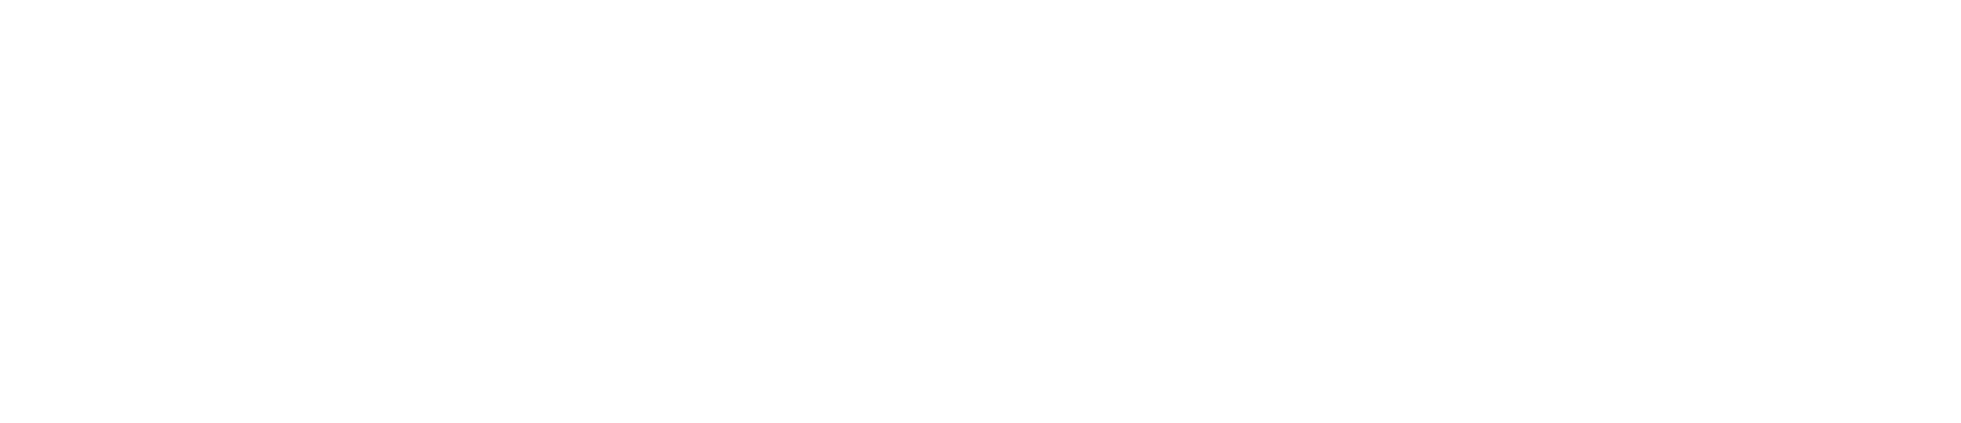 VineConnect® Official Logo